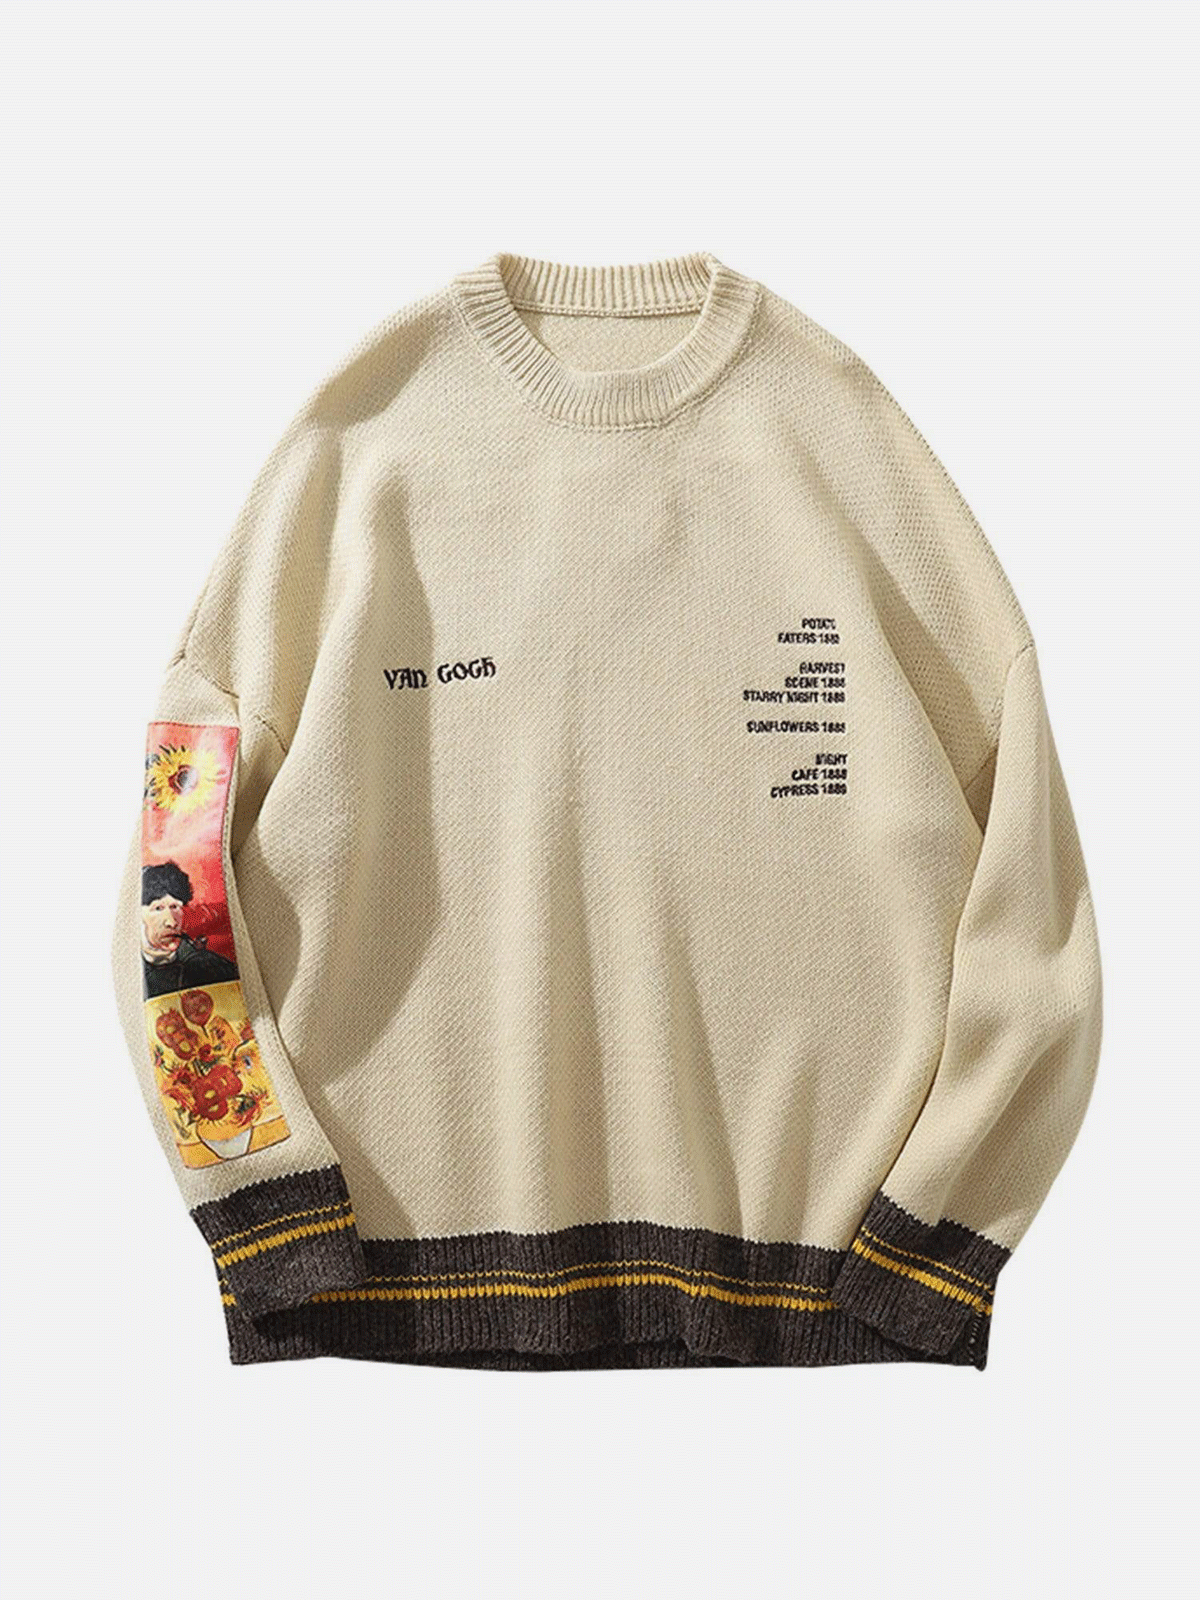 Sunflowers & Self-portrait of Van Gogh Sweater Streetwear Brand Techwear Combat Tactical YUGEN THEORY